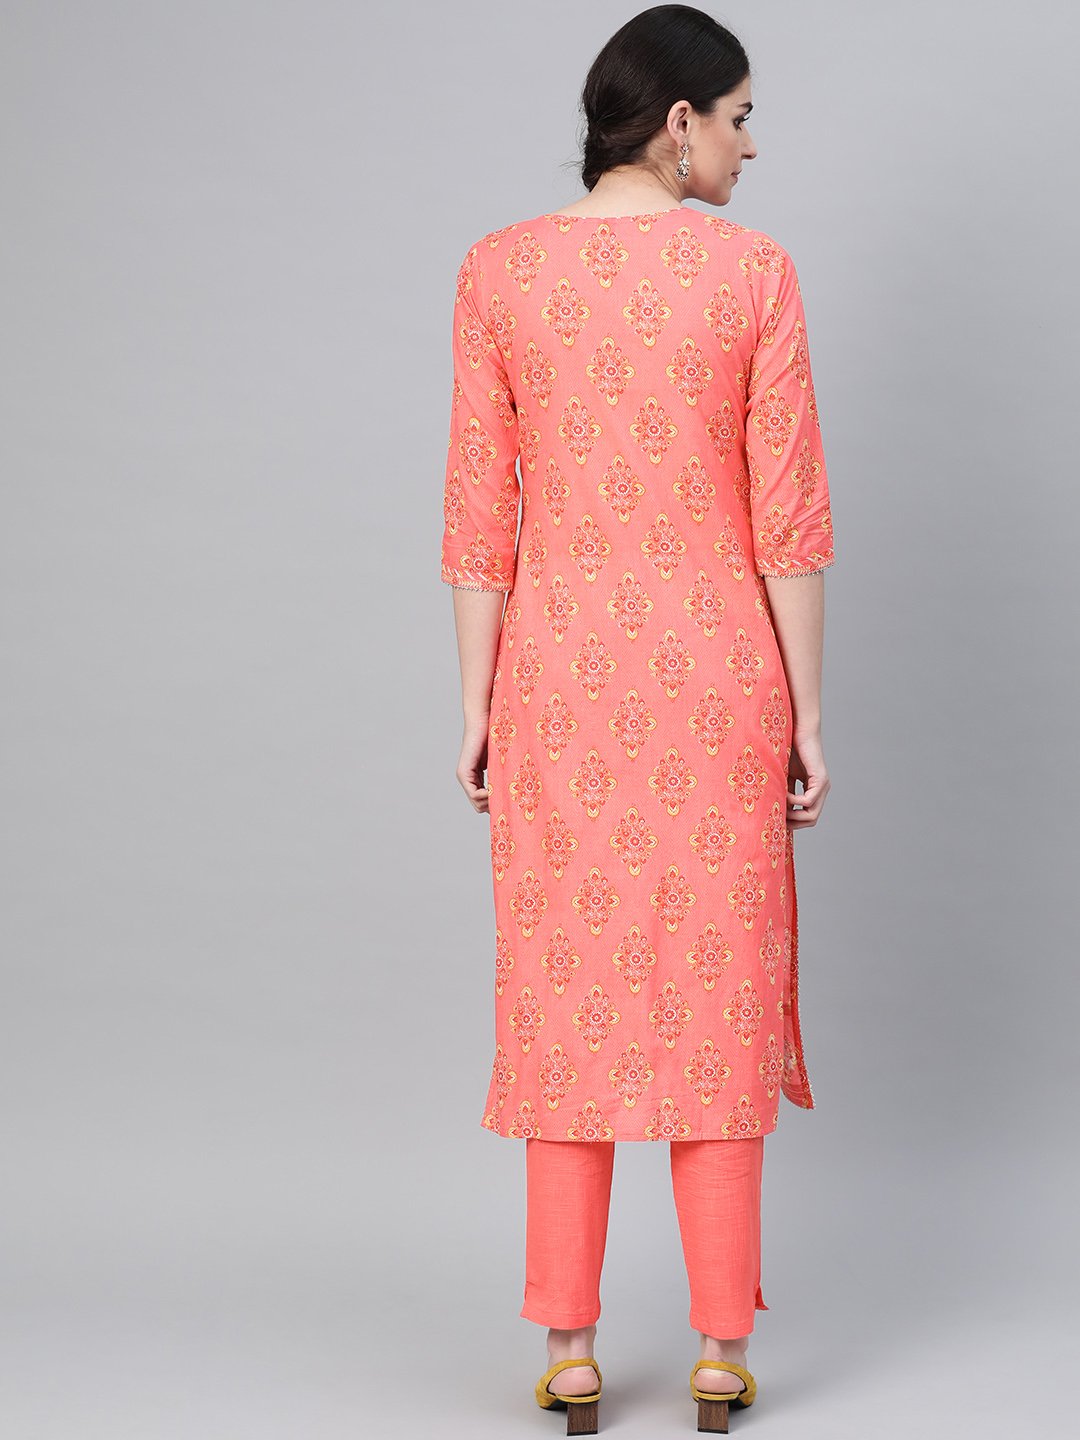 Ishin Women's Cotton Peach Embroidered A-Line Kurta Trouser Set